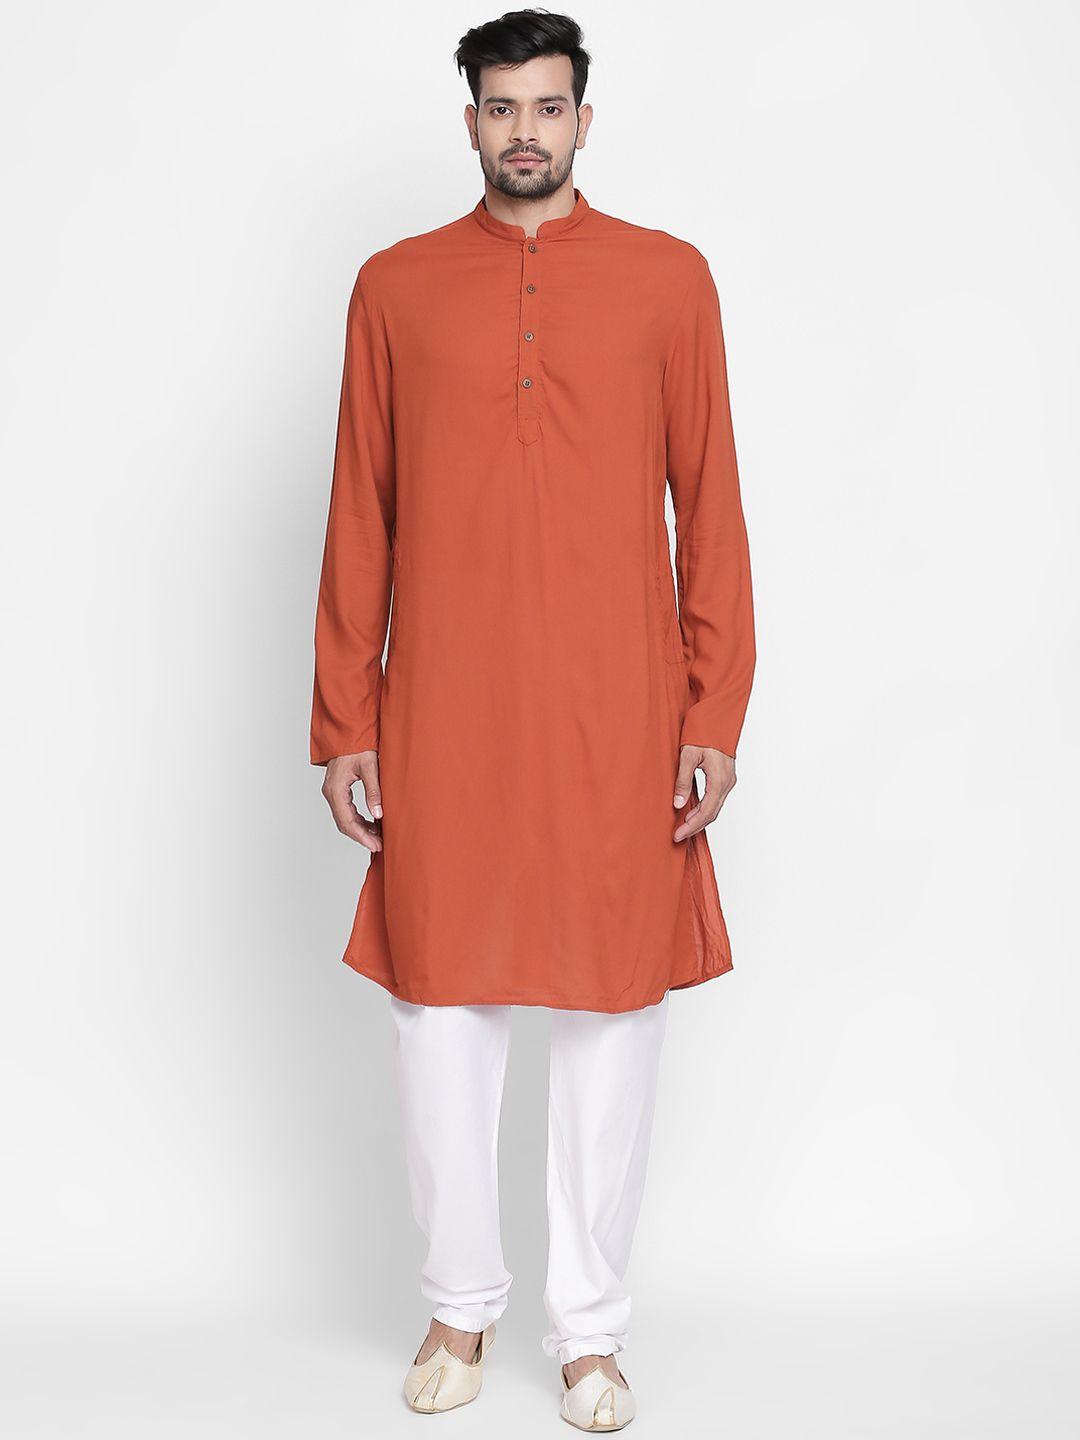 indus route by pantaloons men rust orange solid straight kurta